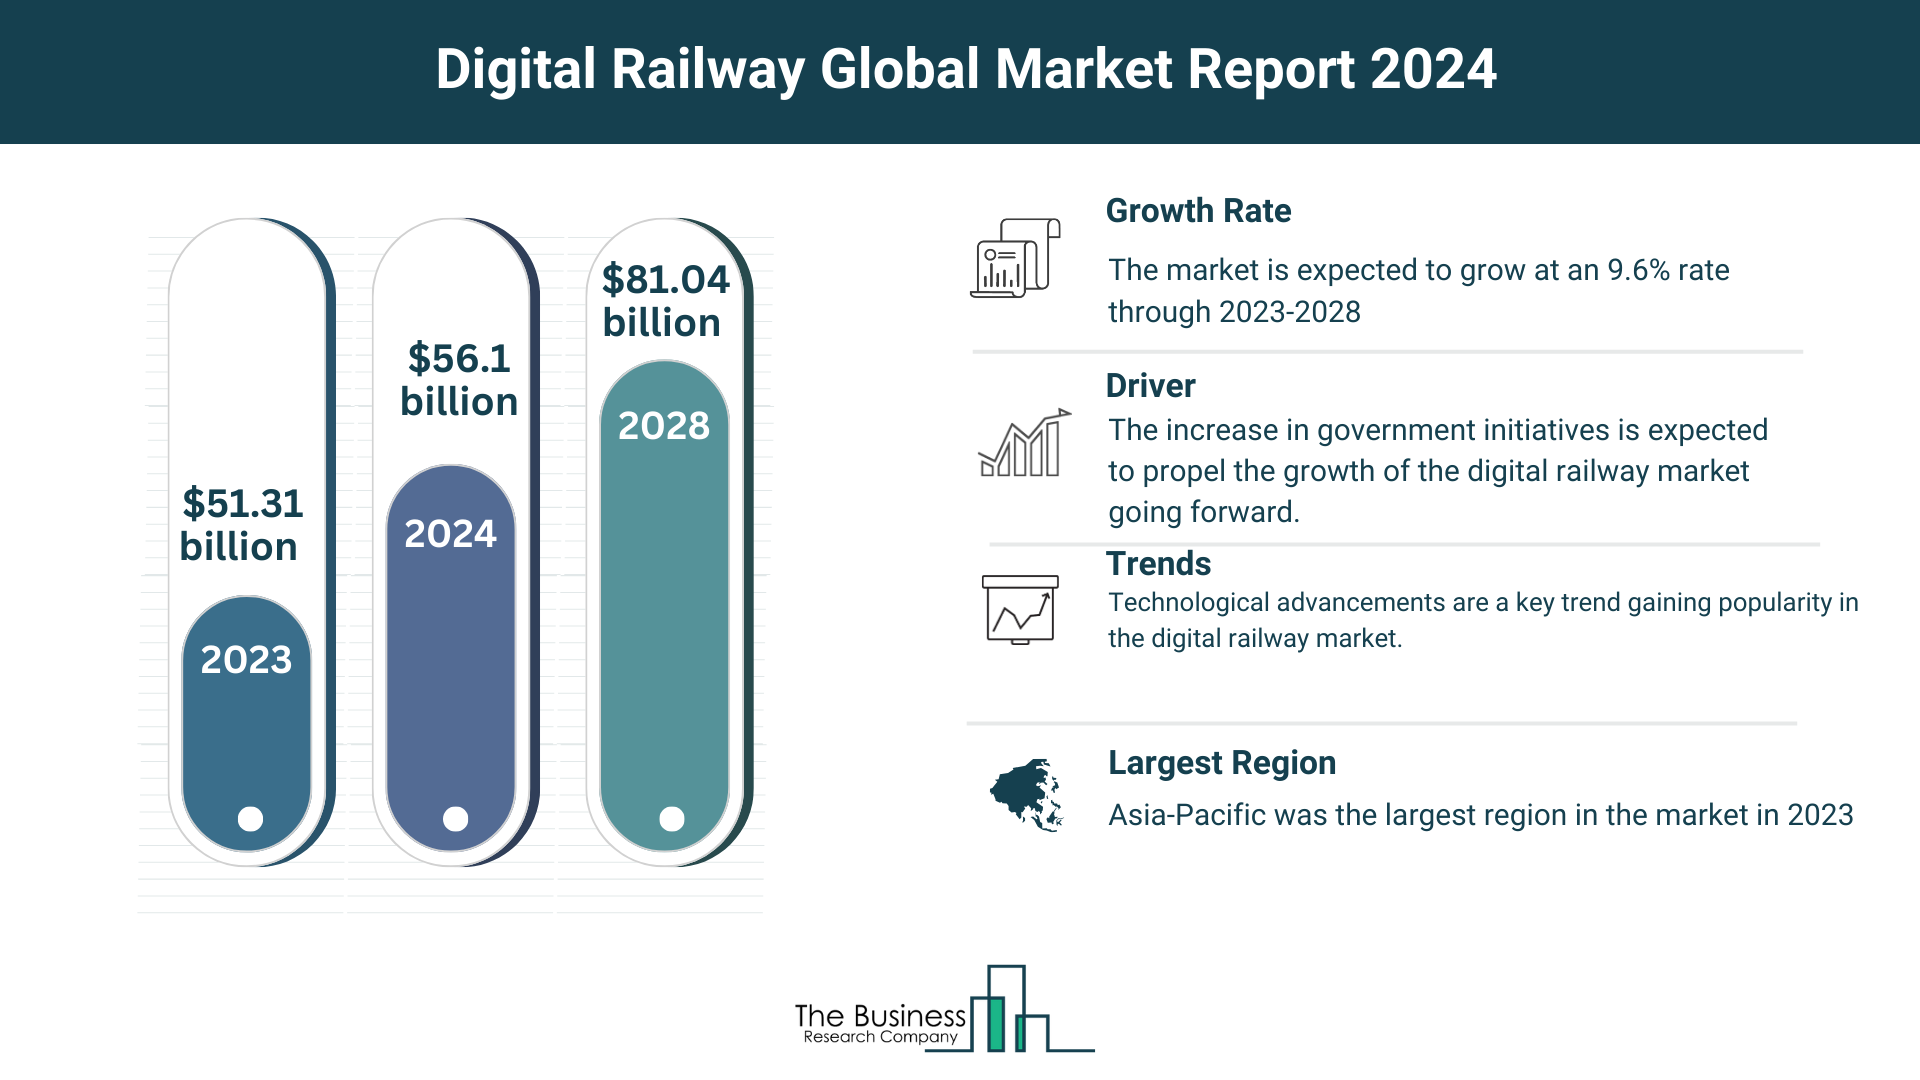 Global Digital Railway Market